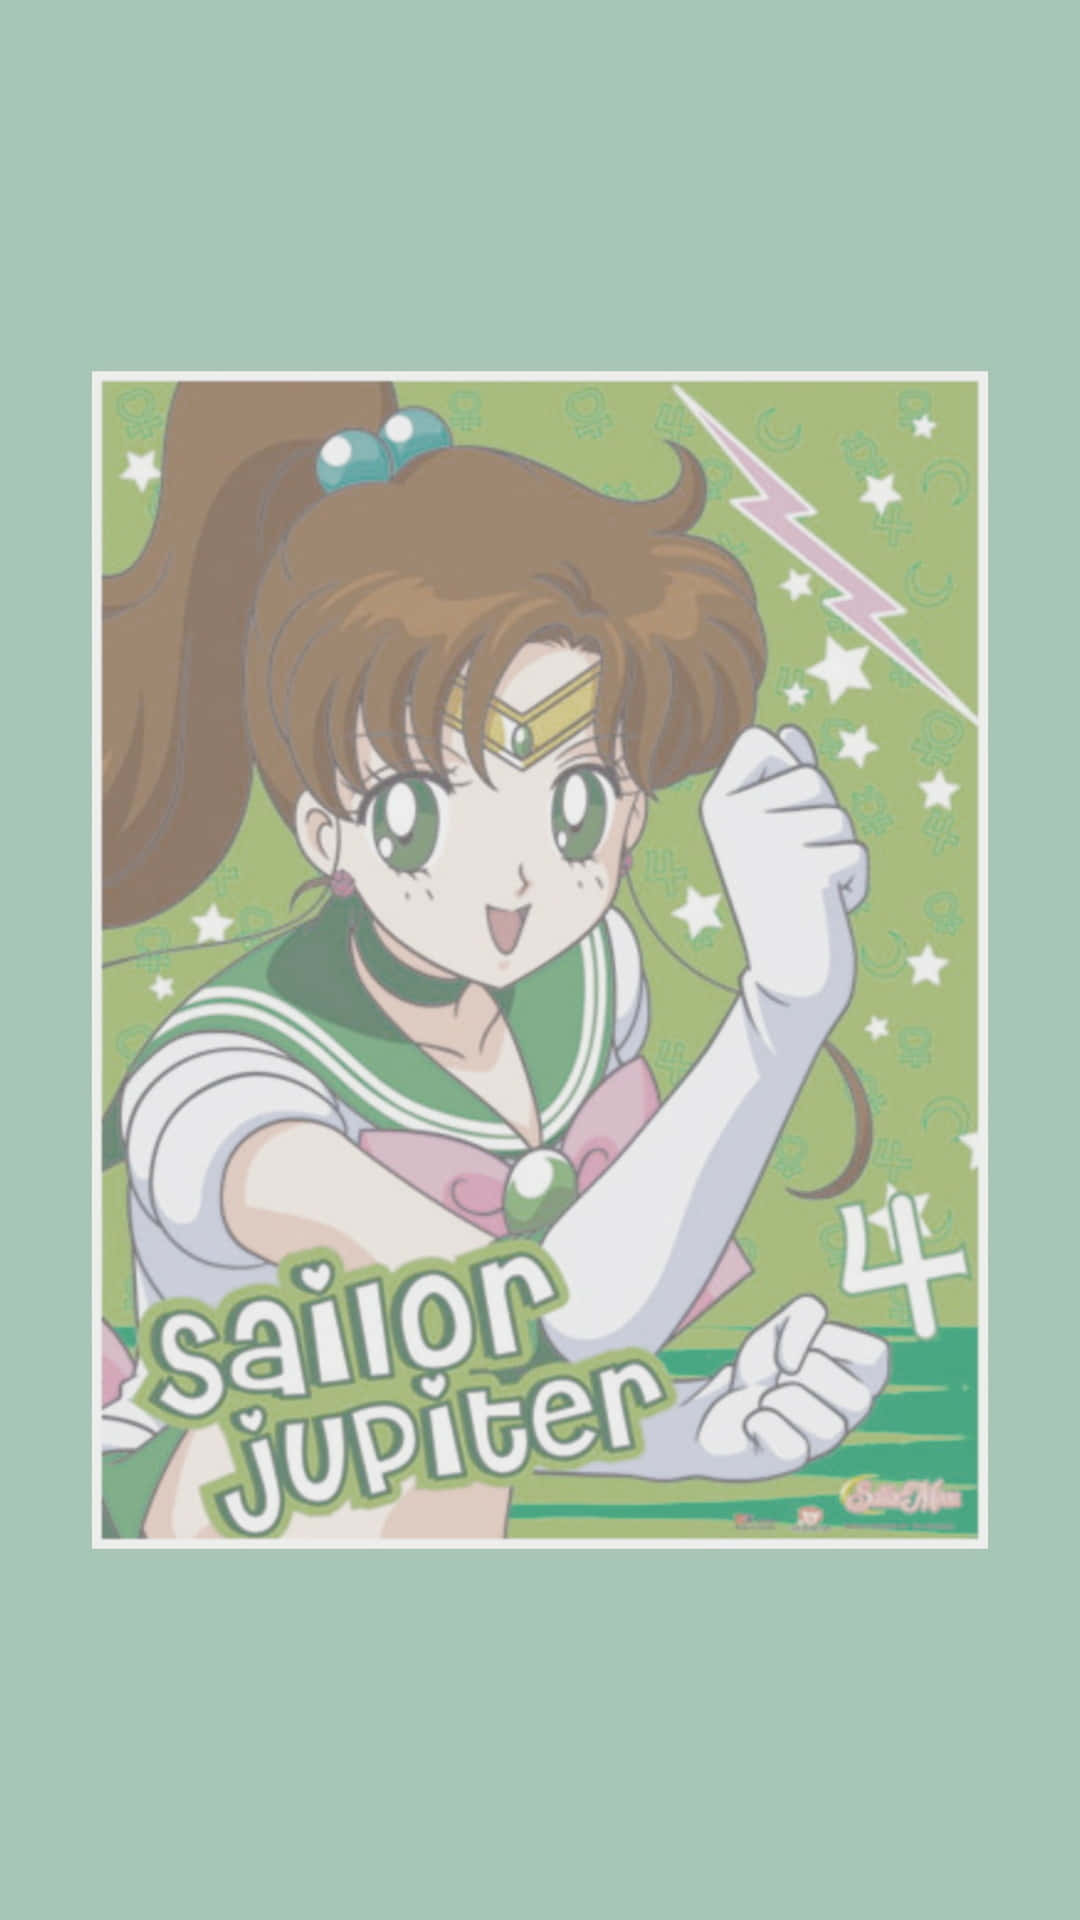 "Rise of Sailor Jupiter!" Wallpaper